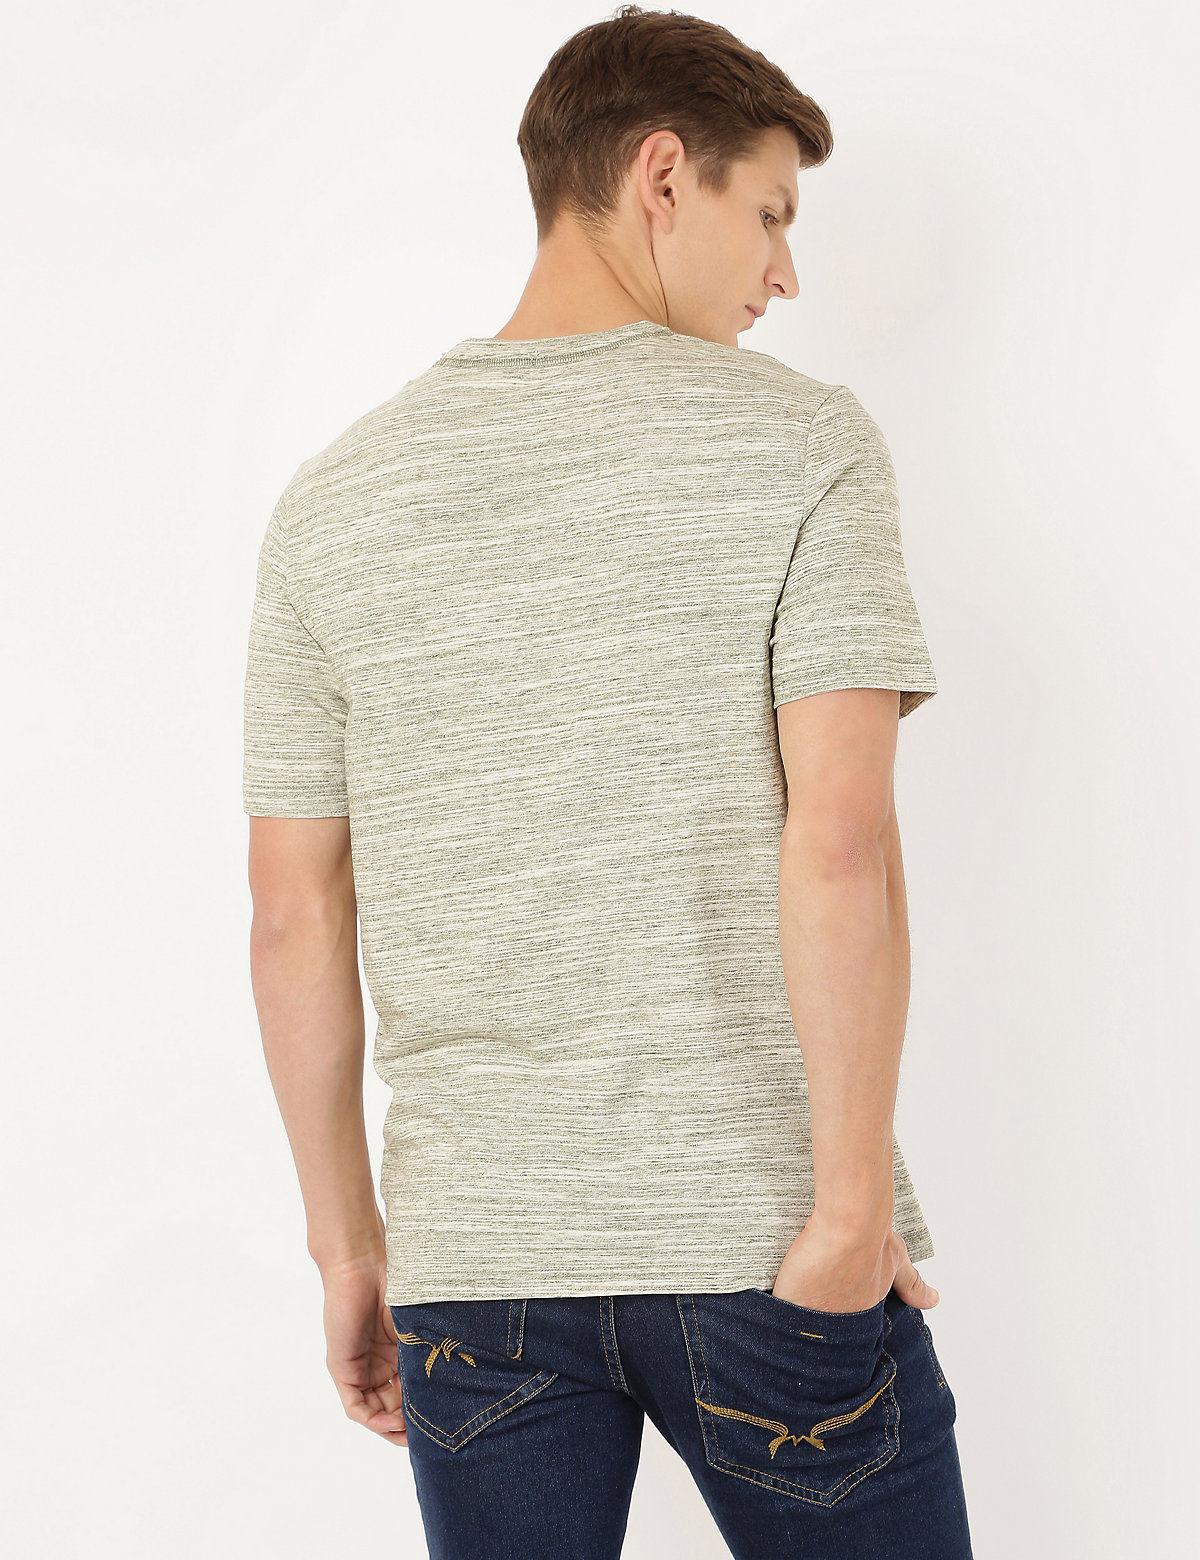 Cotton Mix Self Design Round Neck T-Shirt